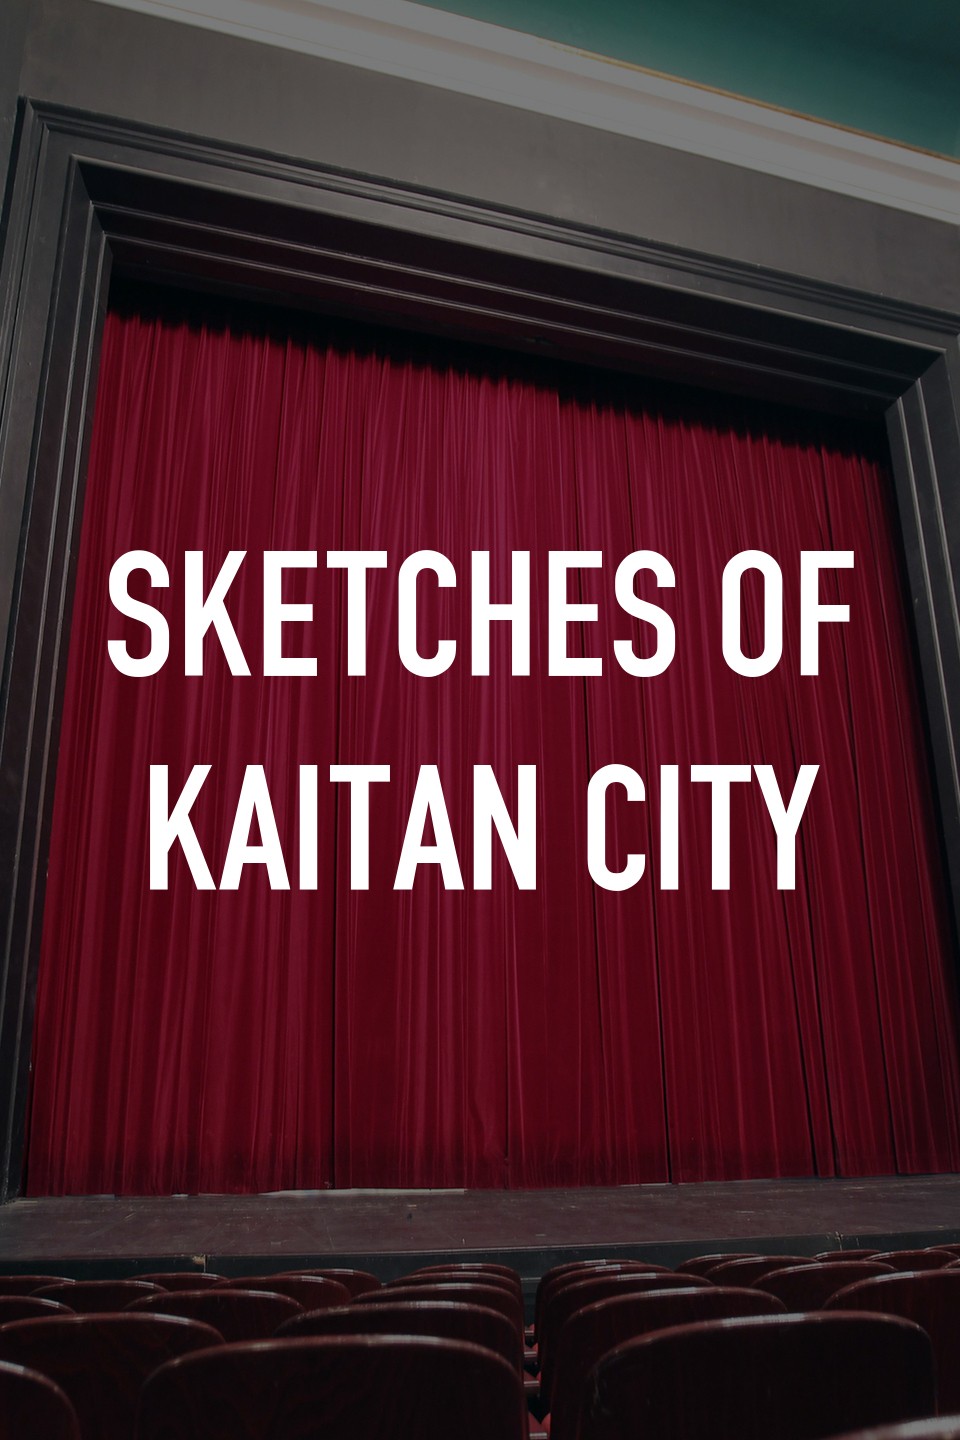 Japanese Movie Drama Sketches of Kaitan City DVD | eBay